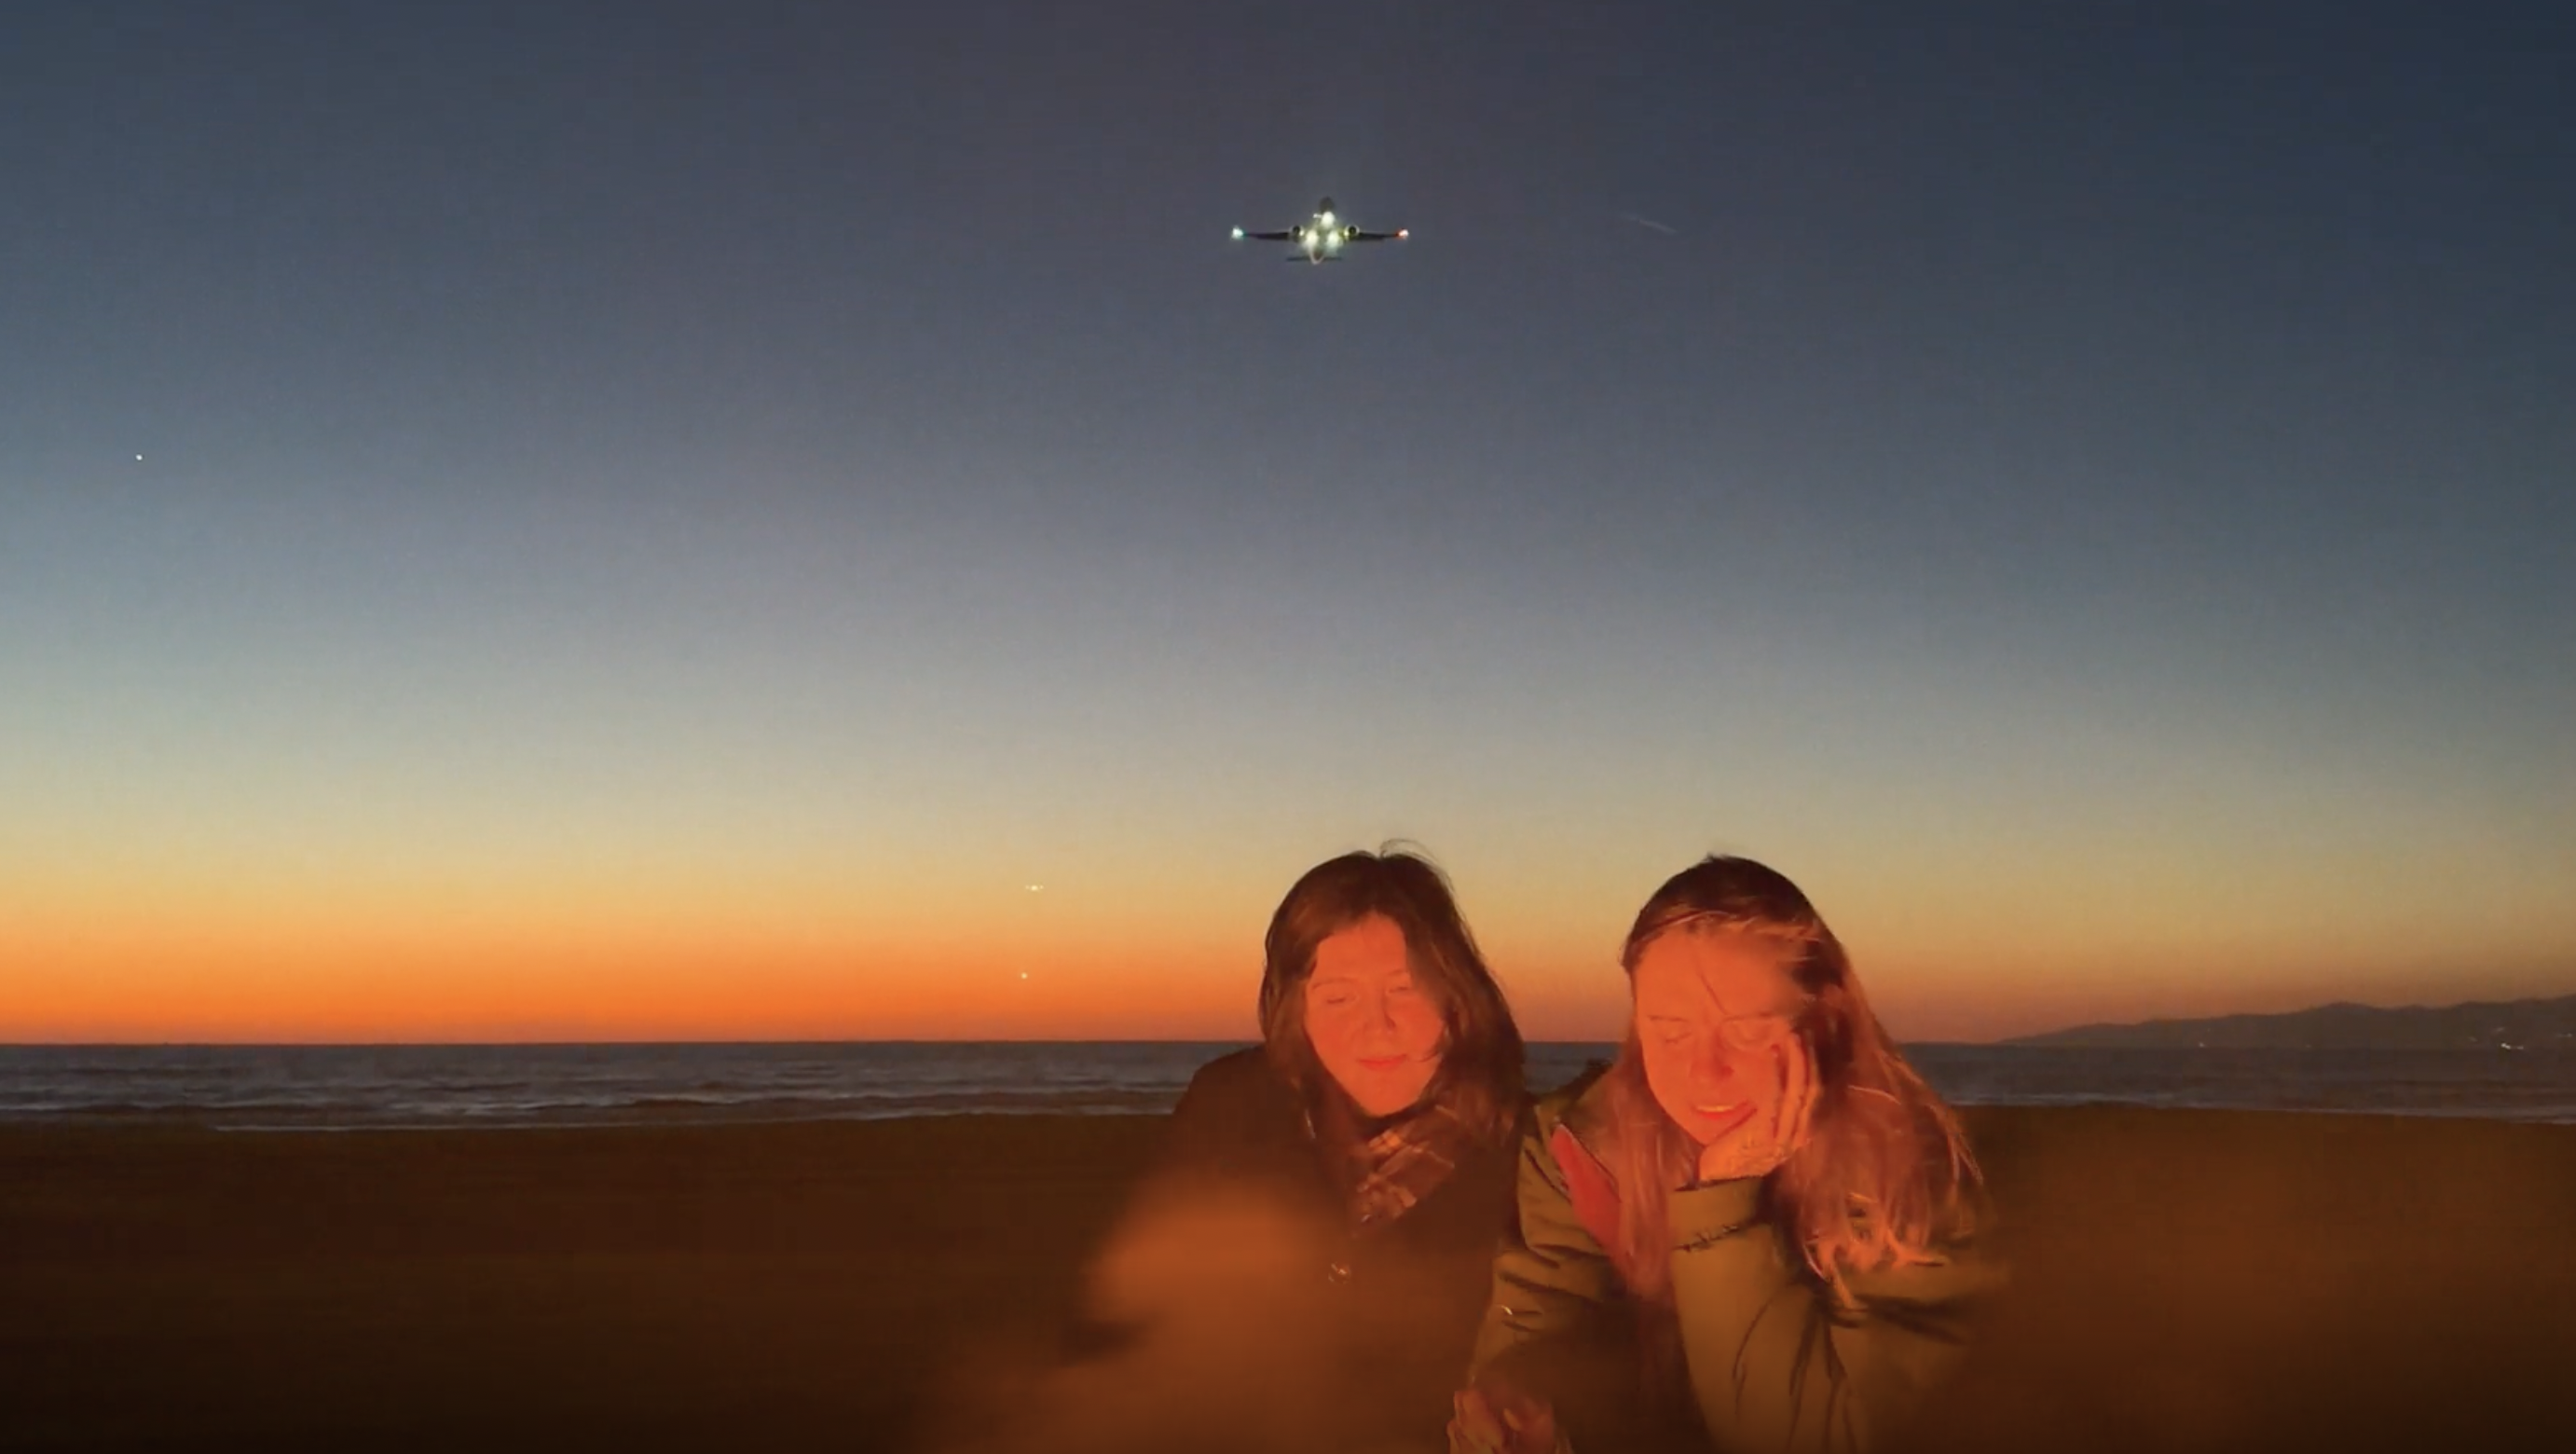 lucy dacus and julien baker on a beach at sunset as a plane flies overhead